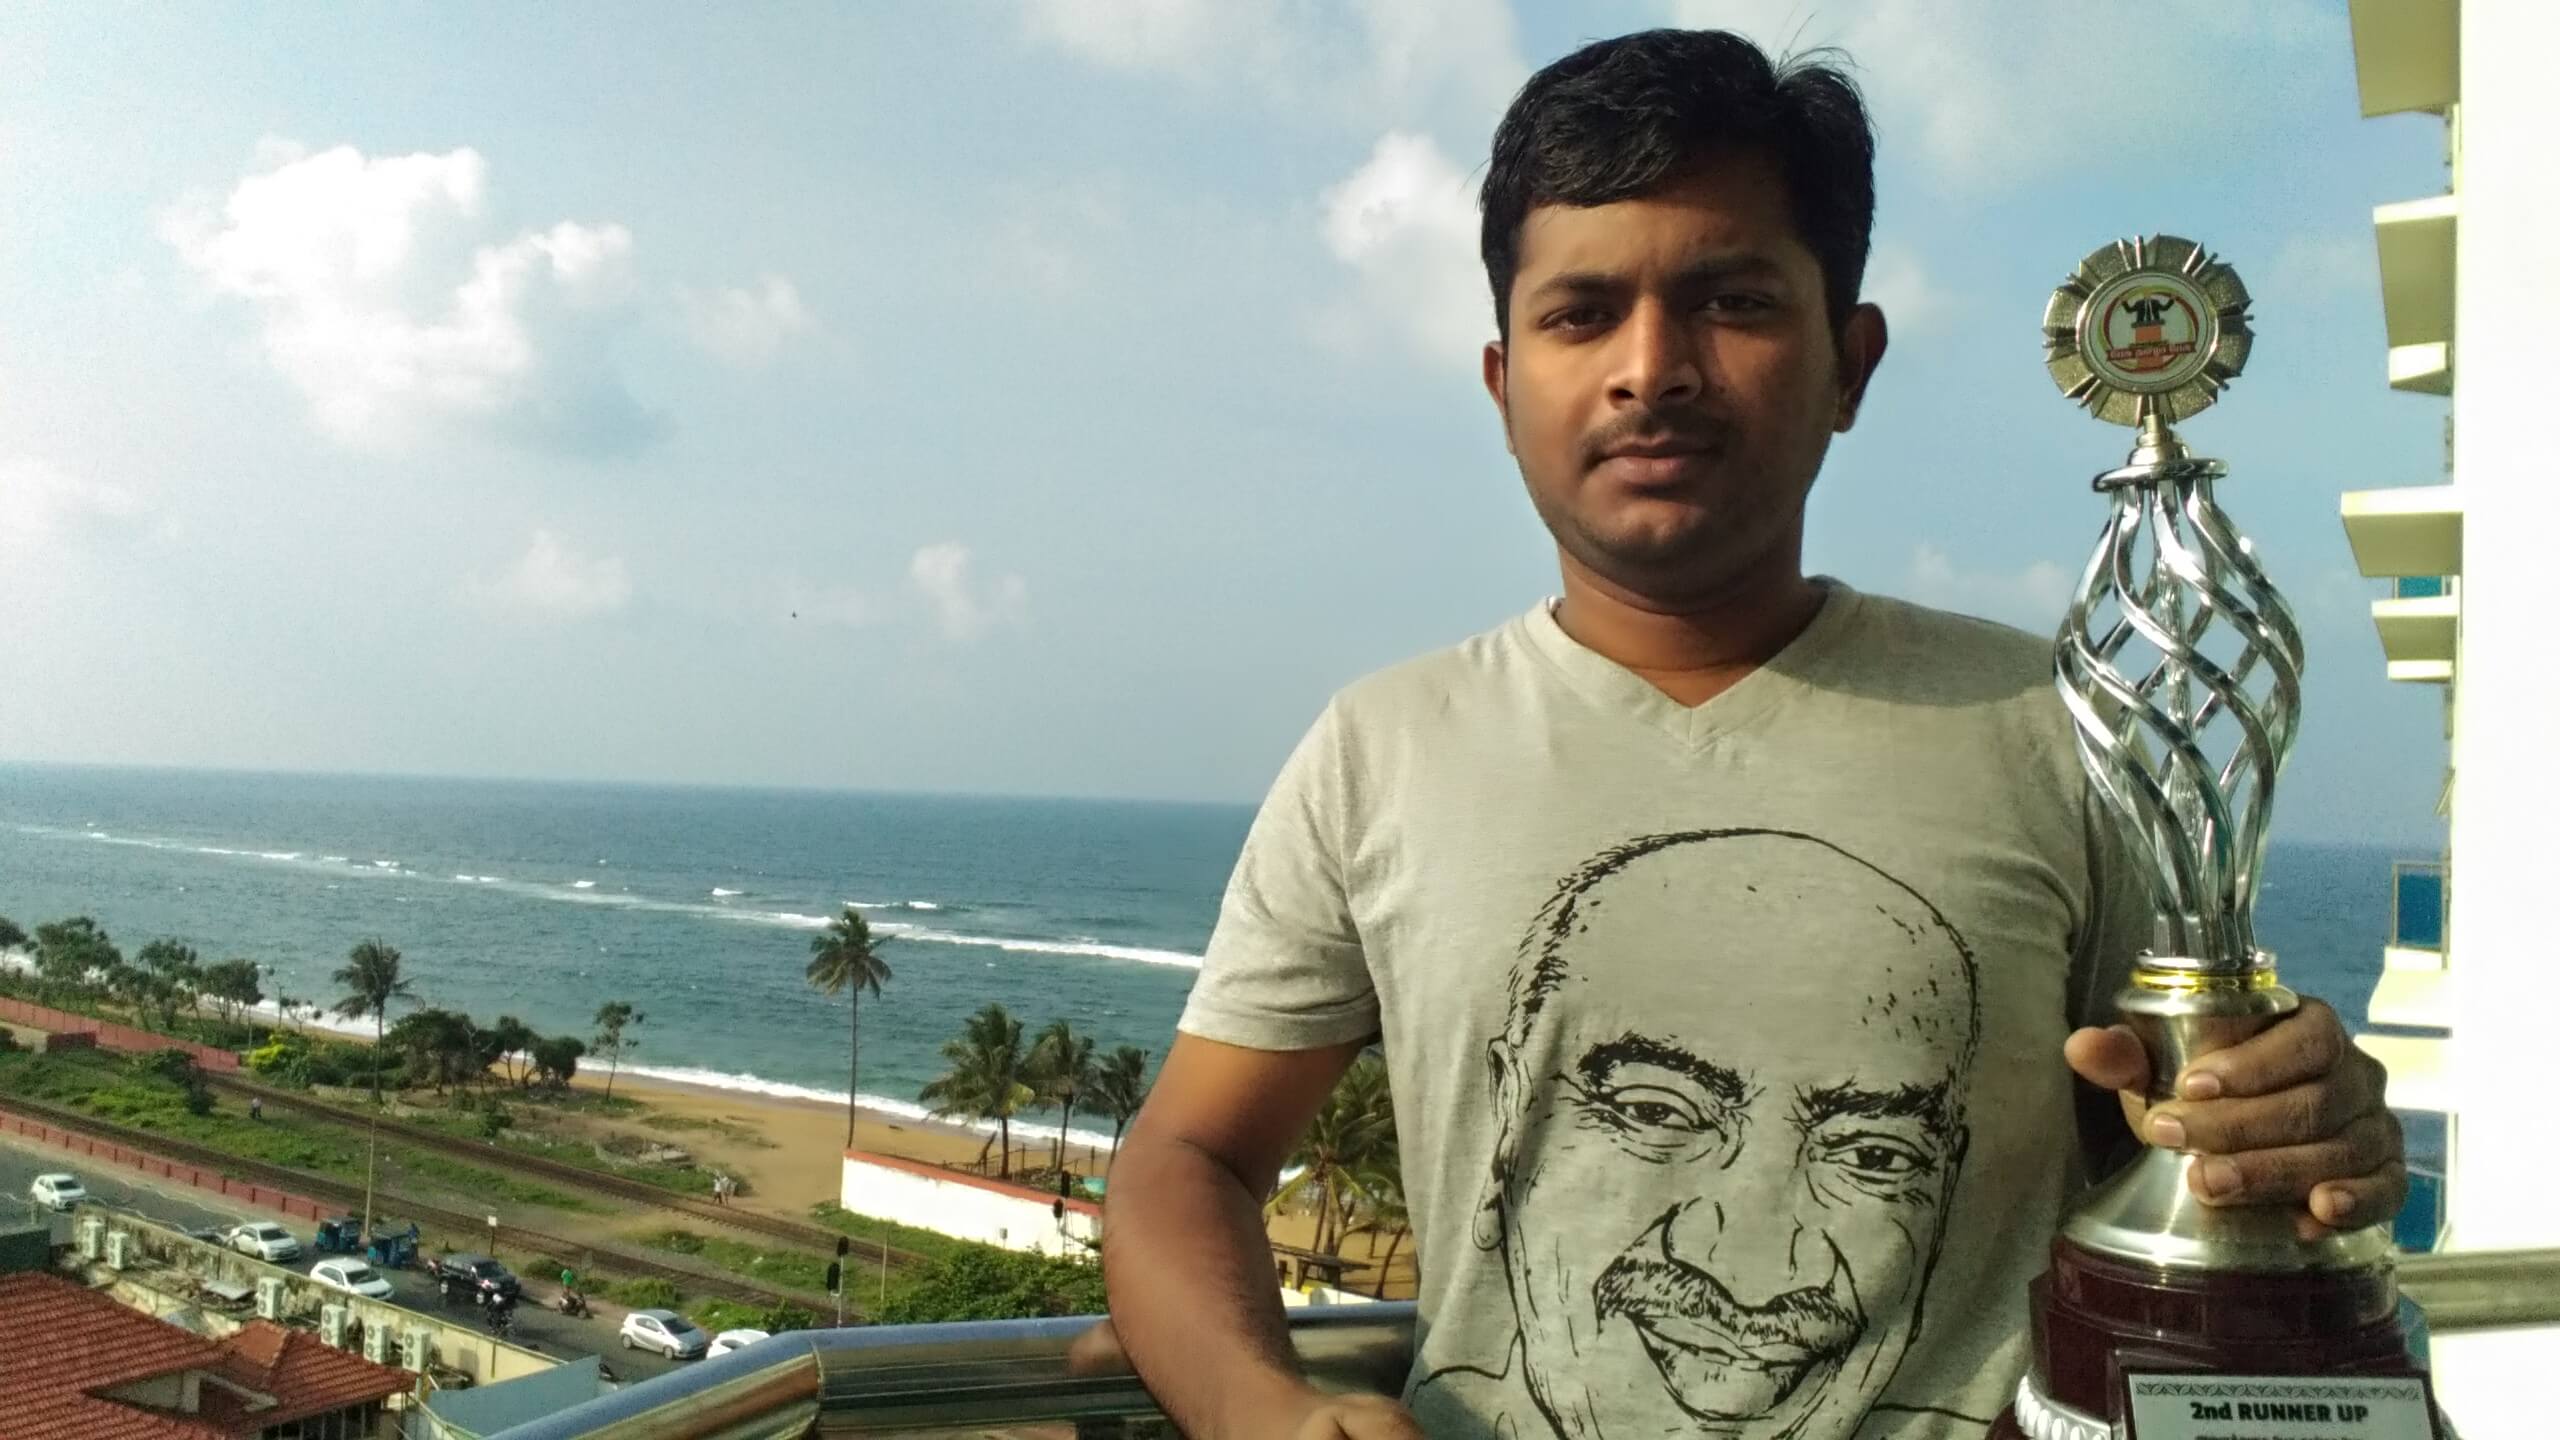 tamil-bharathan-in-srilanka-with-kamarajar-t-shirt